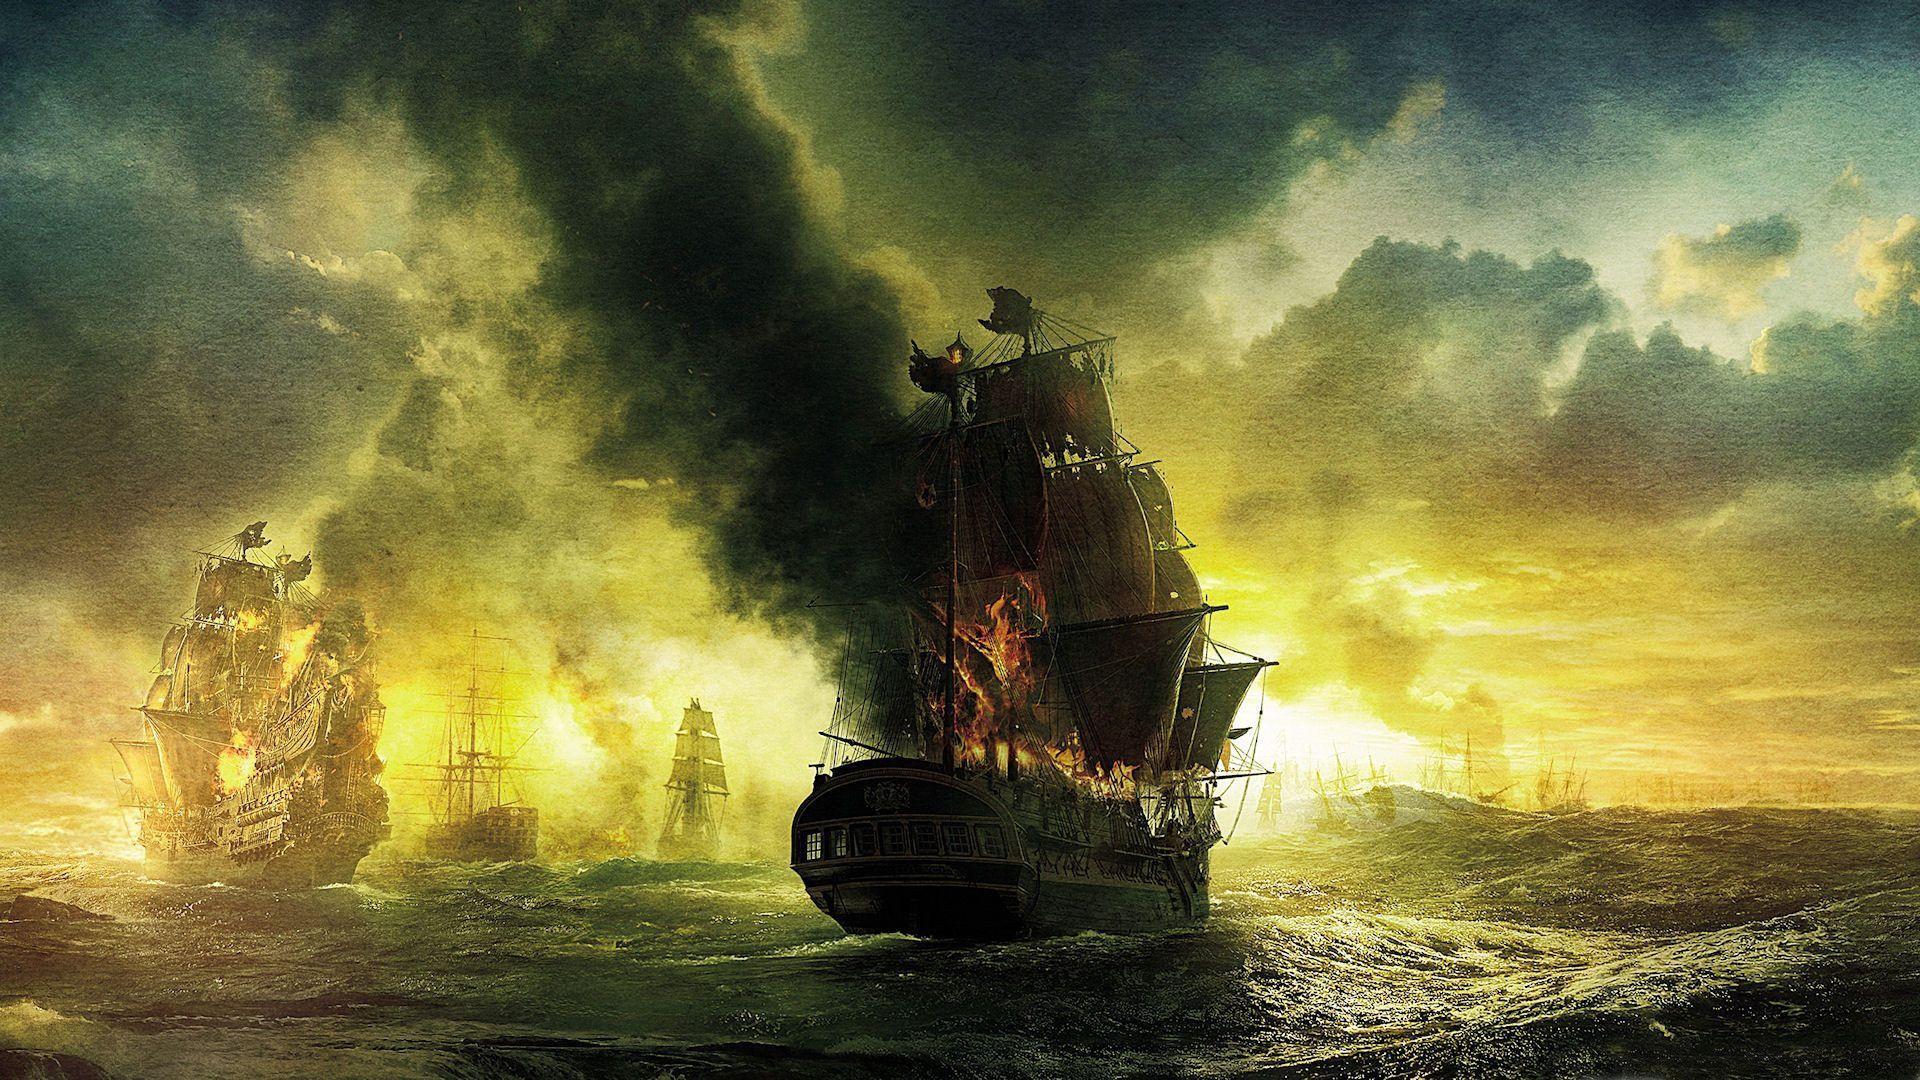 Pirates of the caribbean fantasy art ocean sea ships galleon fire